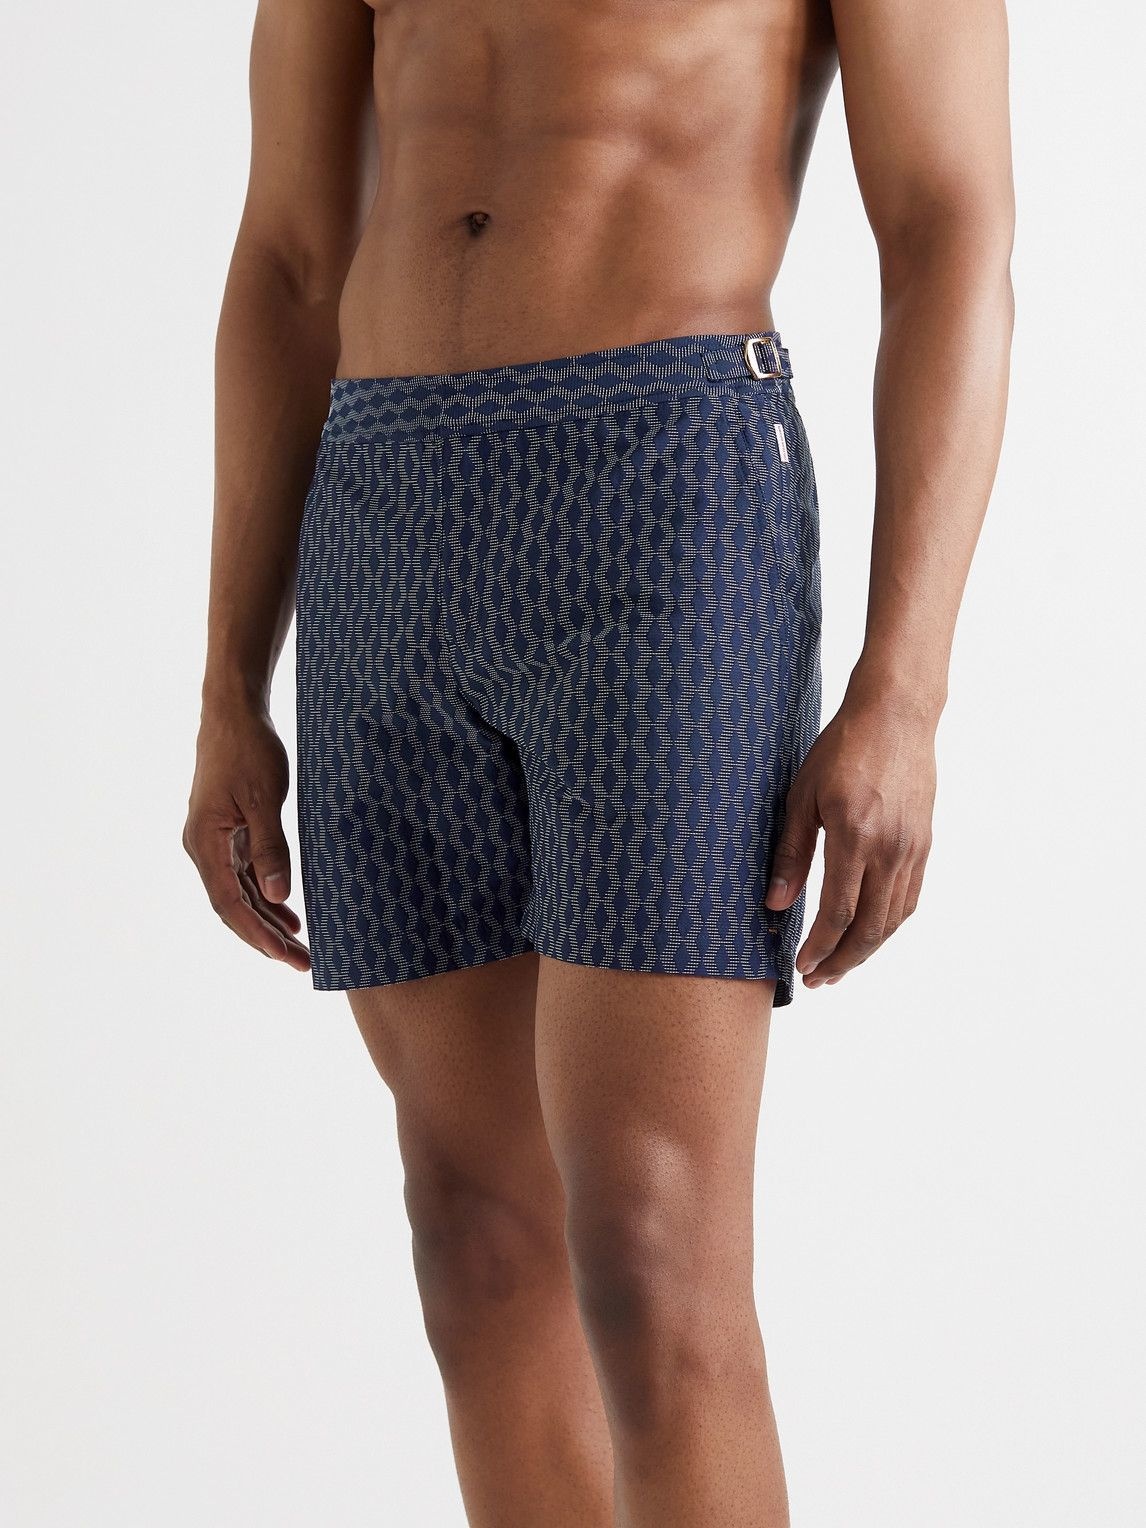 ORLEBAR BROWN Bulldog Straight-Leg Mid-Length Jacquard Swim Shorts for Men